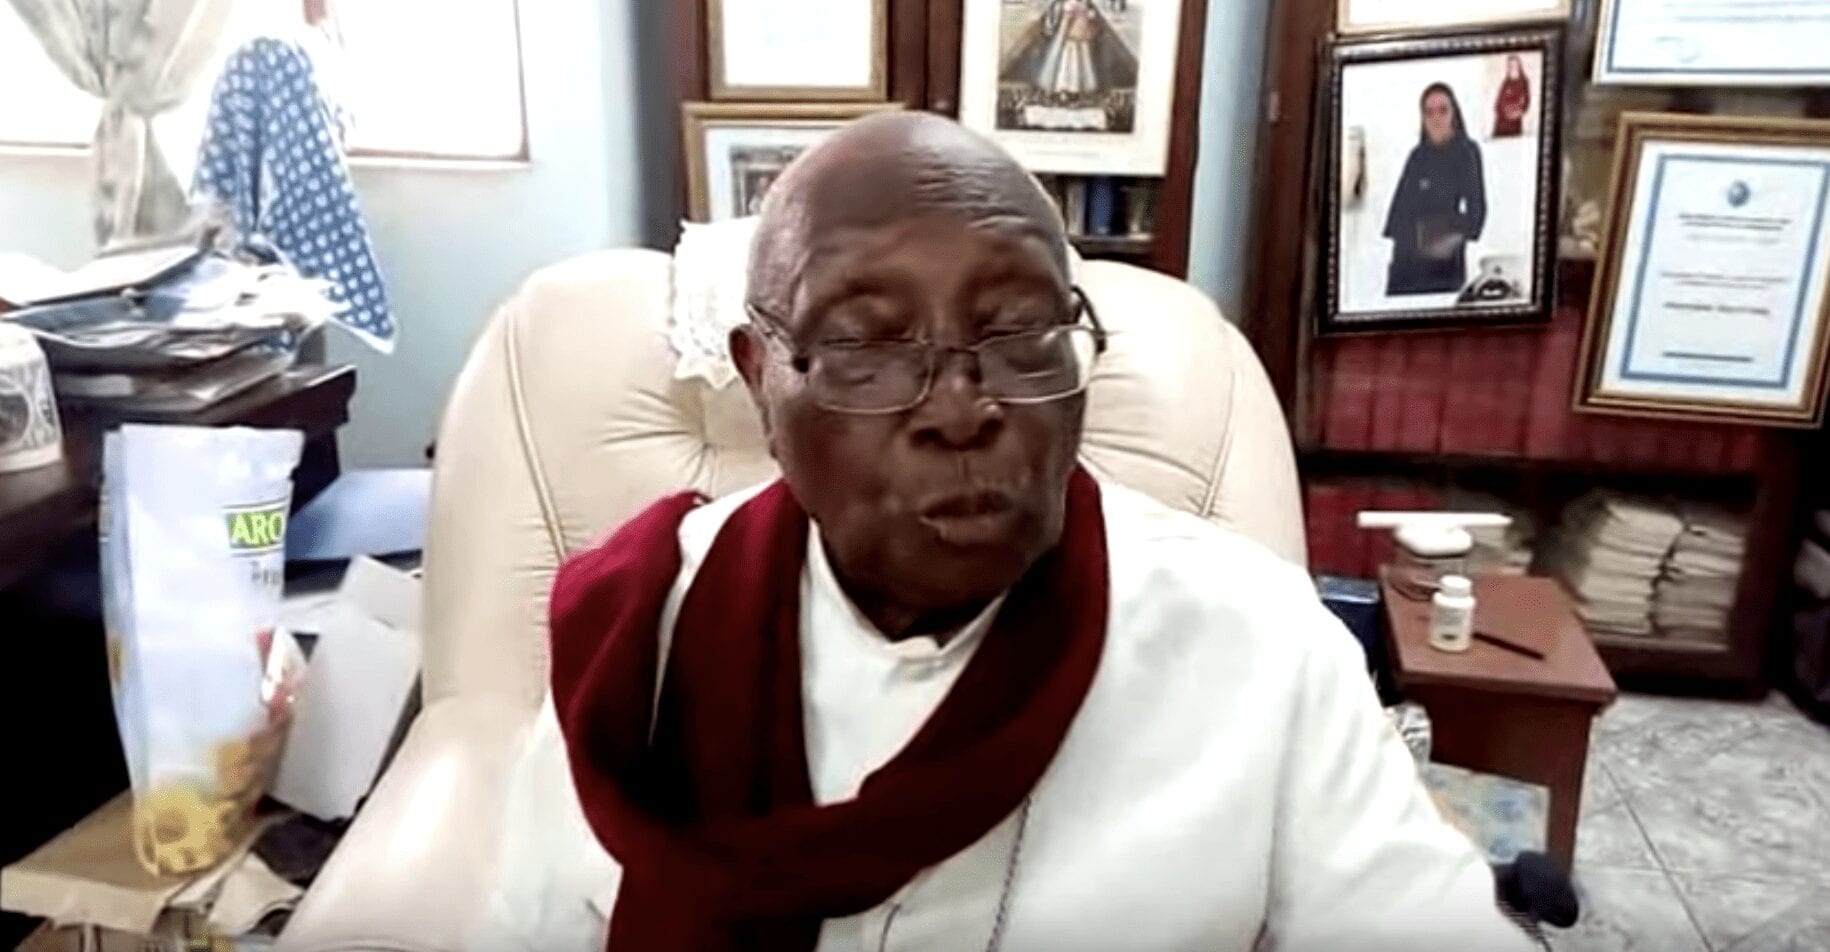 Ramené À Sa Résidence Manu-Militari, Mgr Kpodzro S’adresse Aux Togolais : « Gardez Courage »